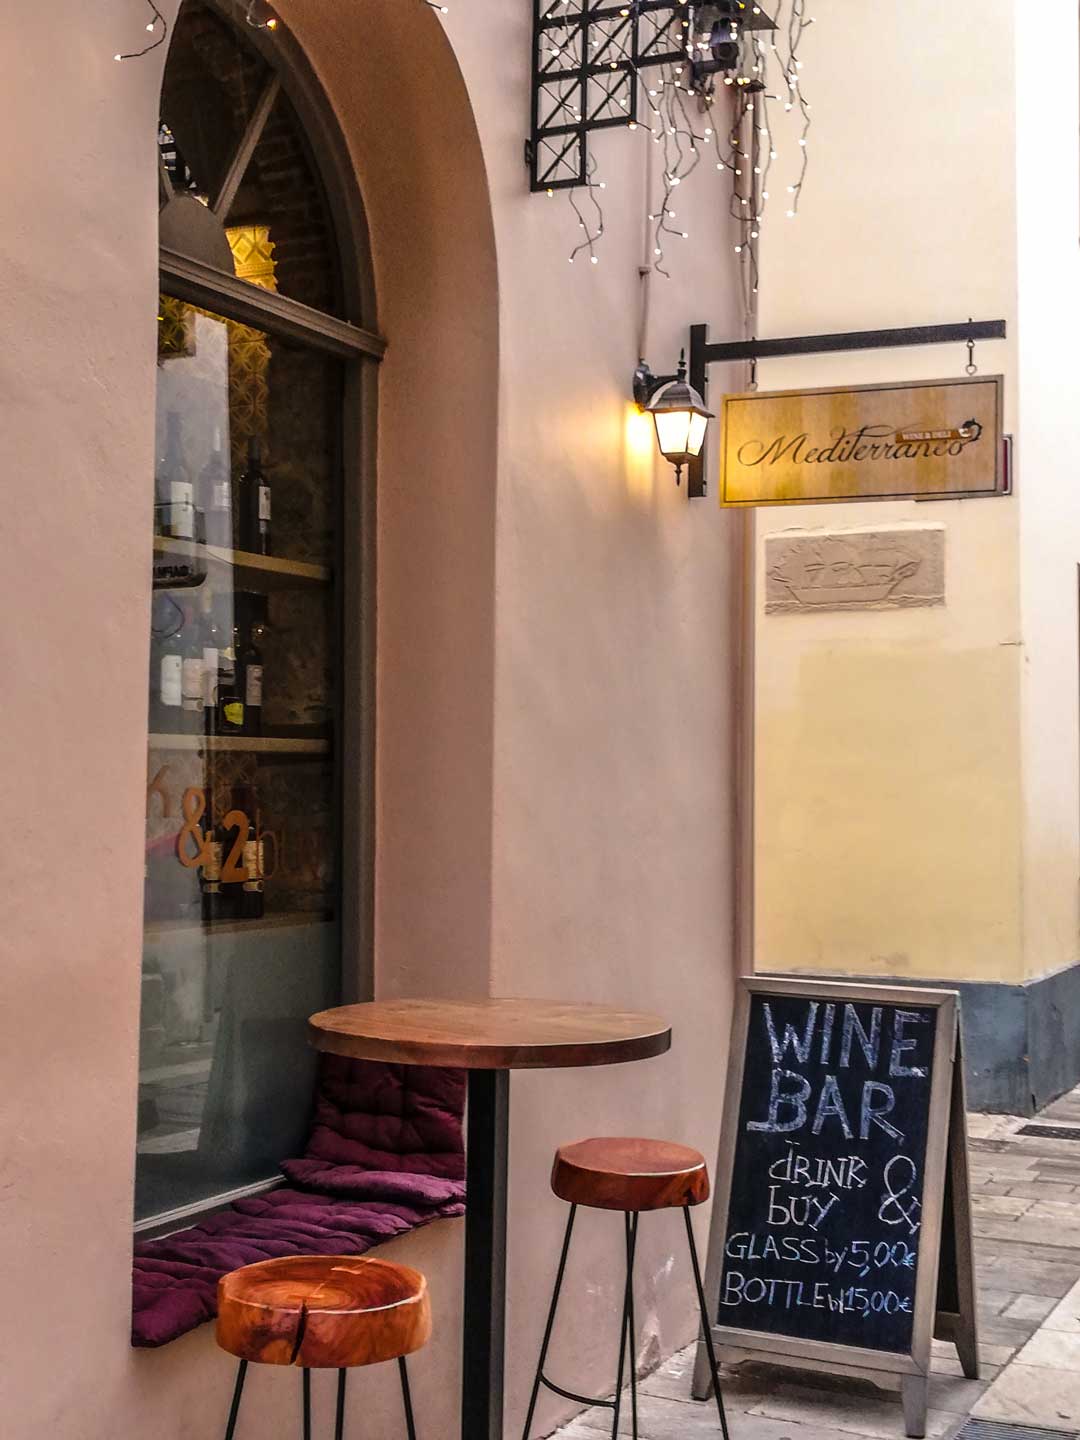 Wine bar Ναύπλιο travelshare.gr